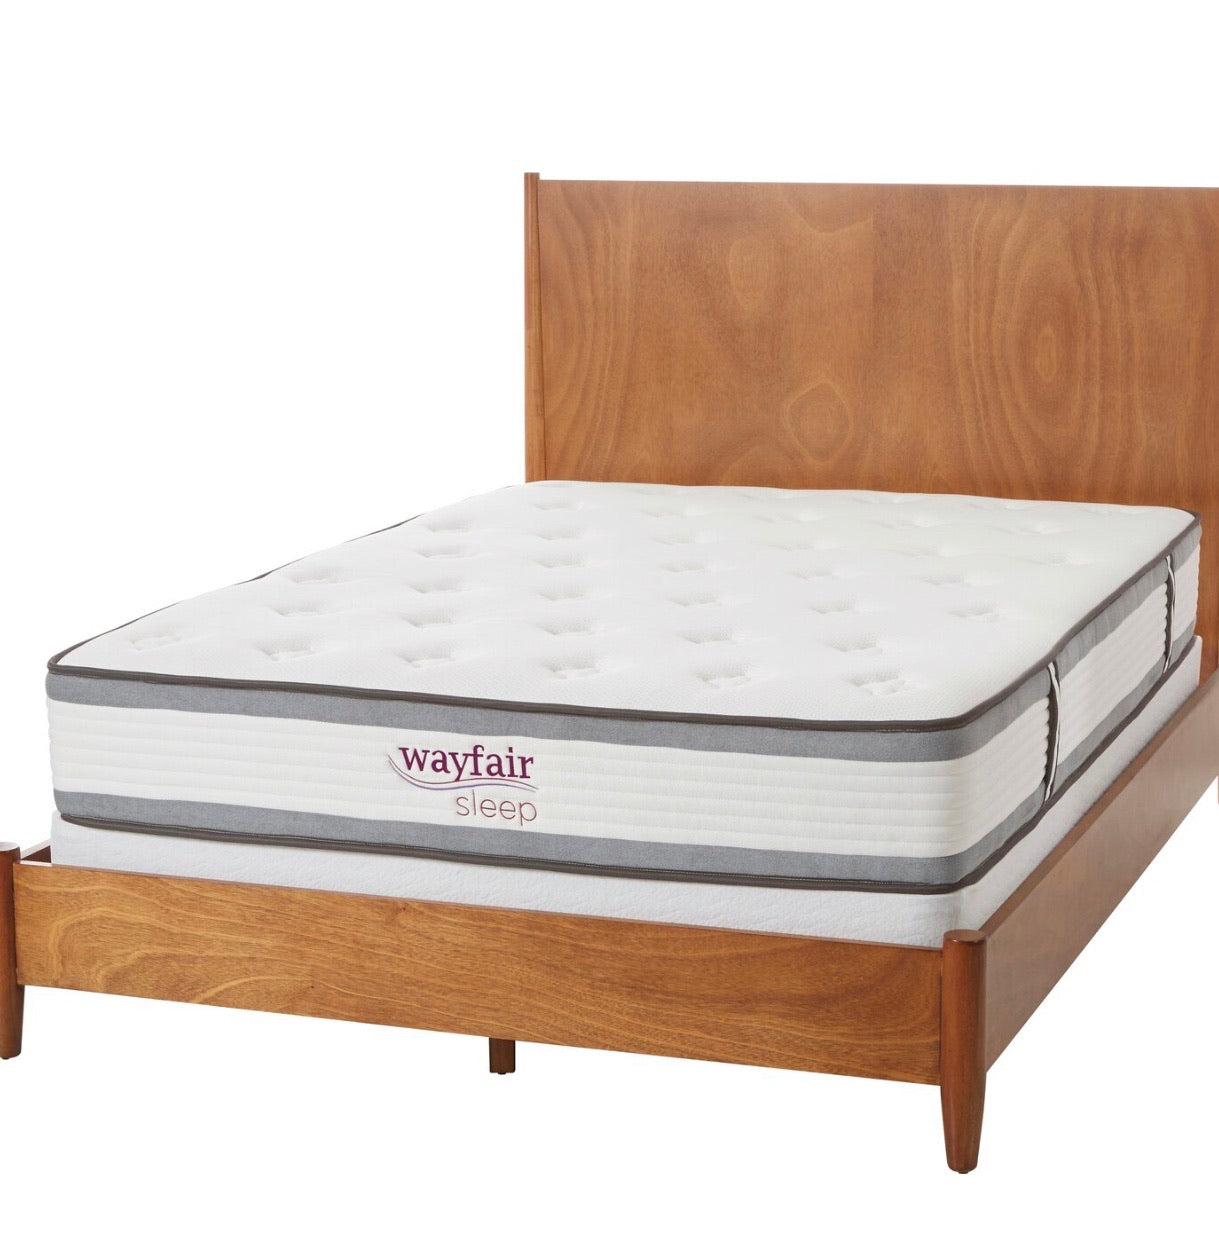 Wayfair Sleep 10.5” Firm Hybrid Twin Mattress 38”W x 75”L #23HW